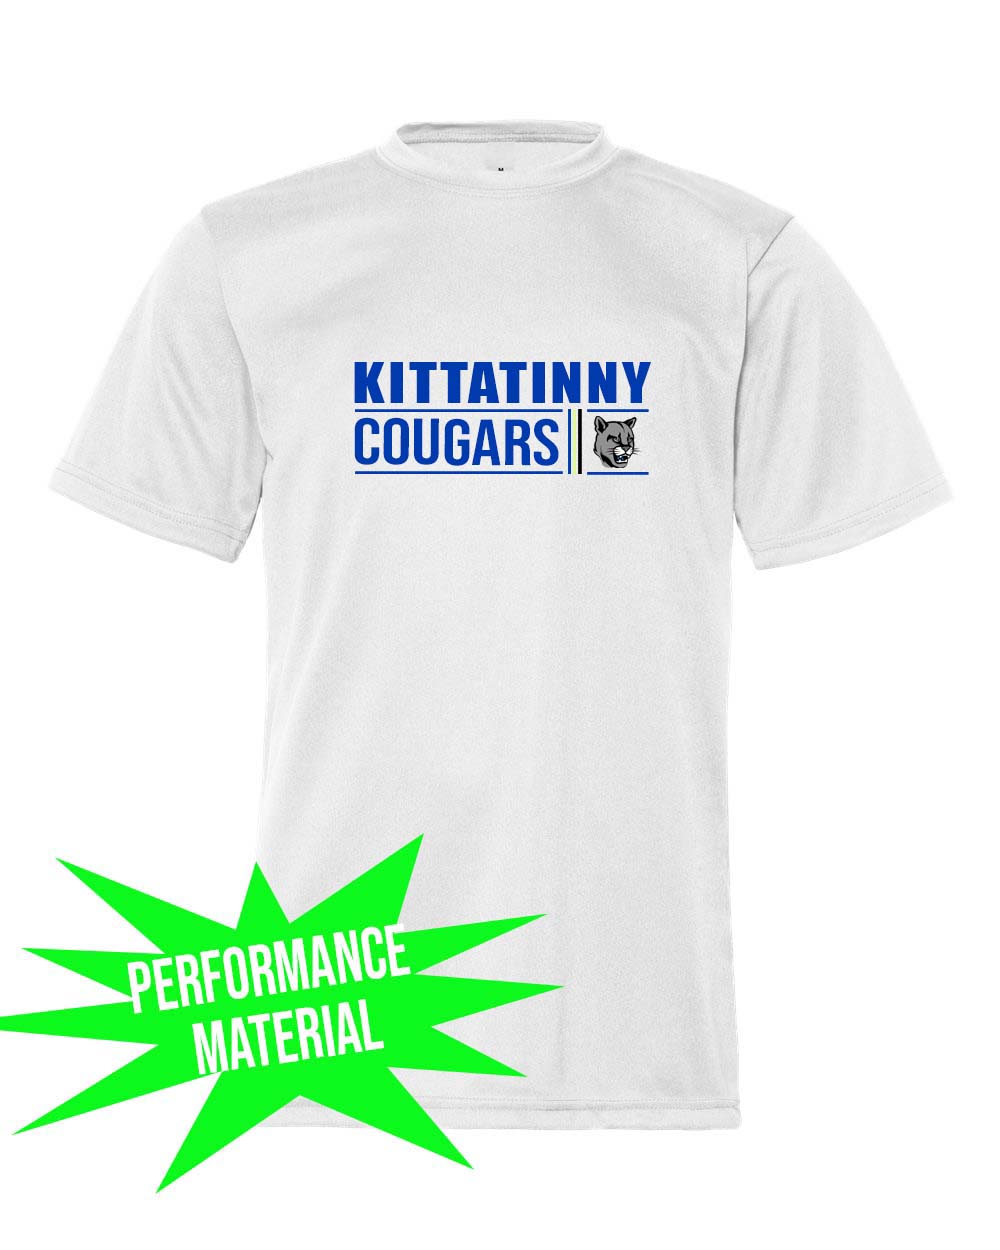 KRHS Performance Material design 7 T-Shirt